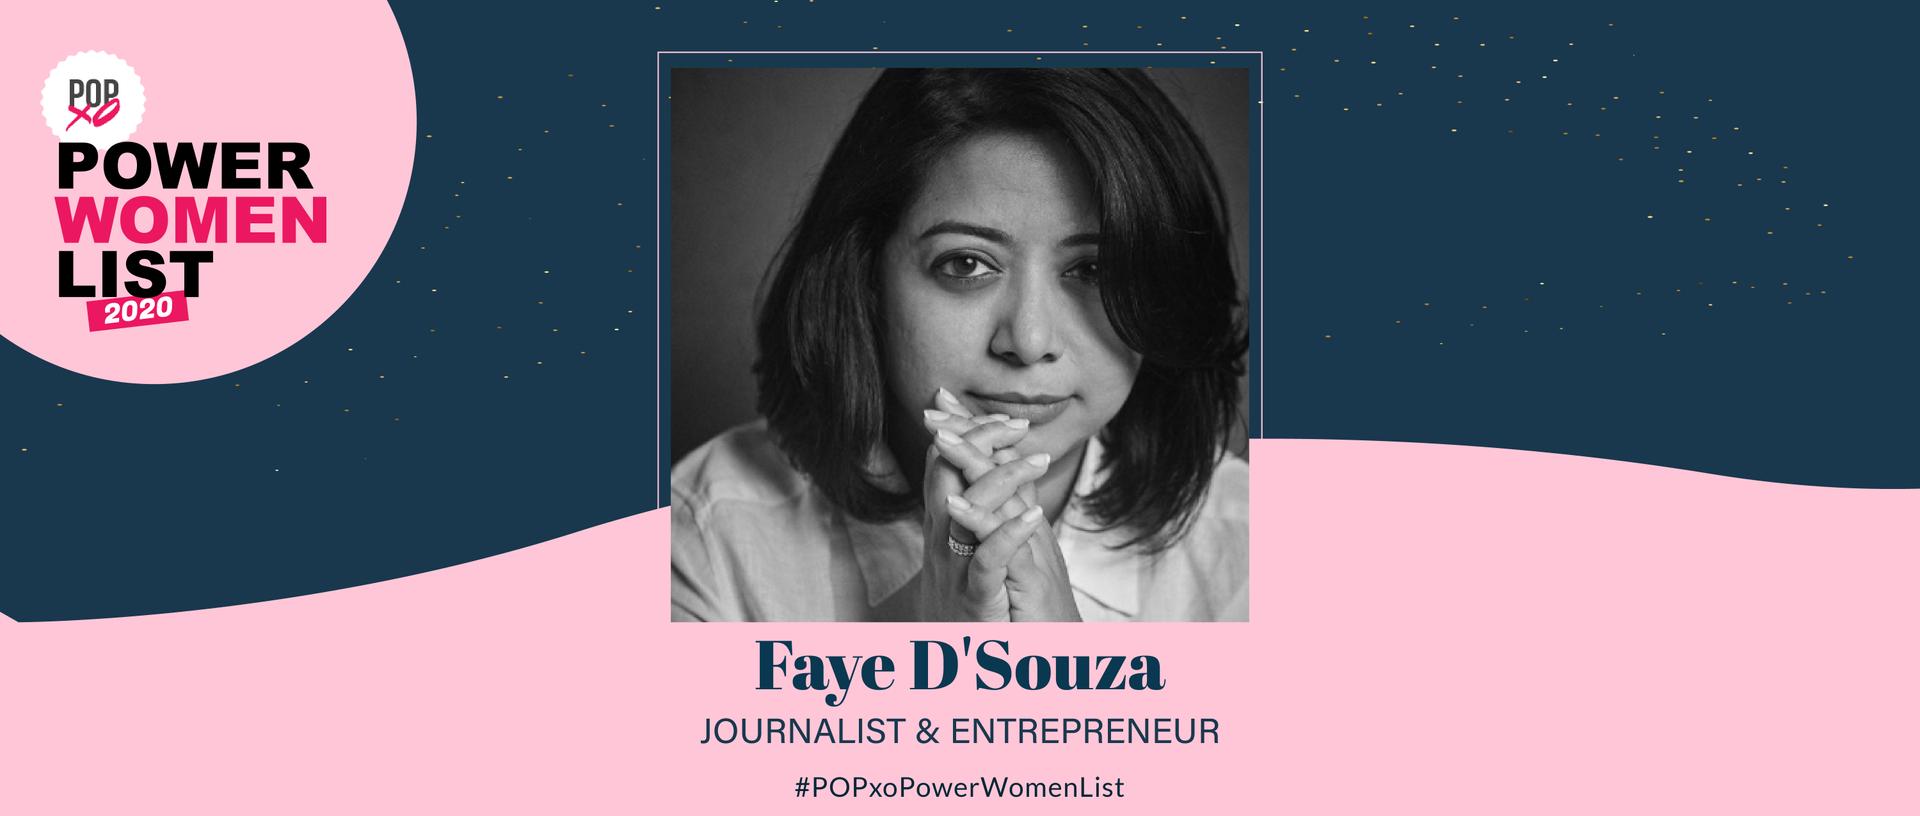 POPxo Power Women List 2020: Faye D’Souza, The Bold &amp; Fearless Face Of Journalism